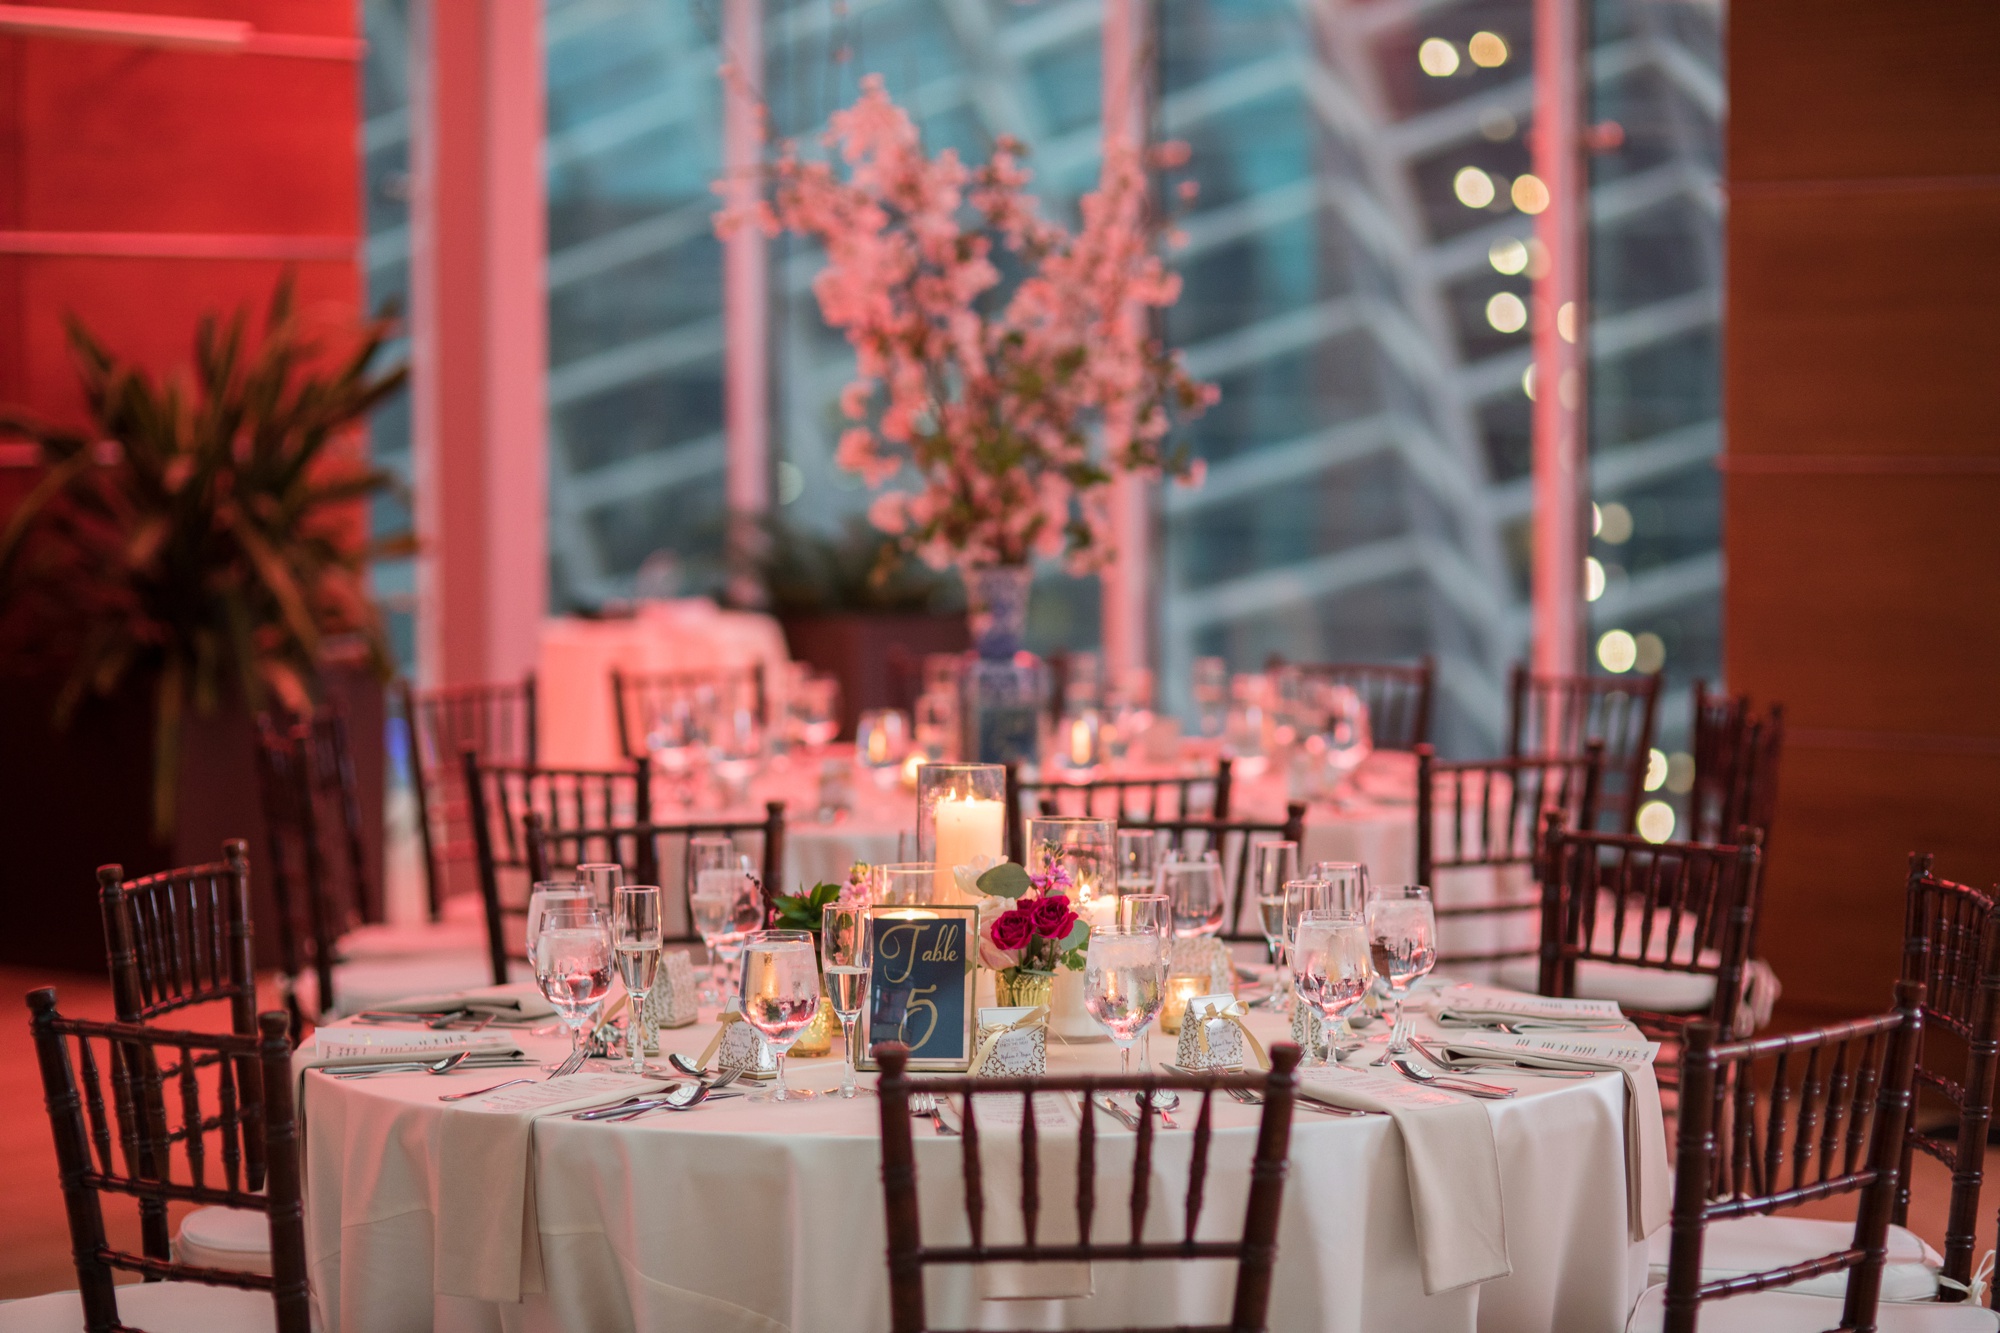 Romantic Kimmel Center Wedding Reception Space